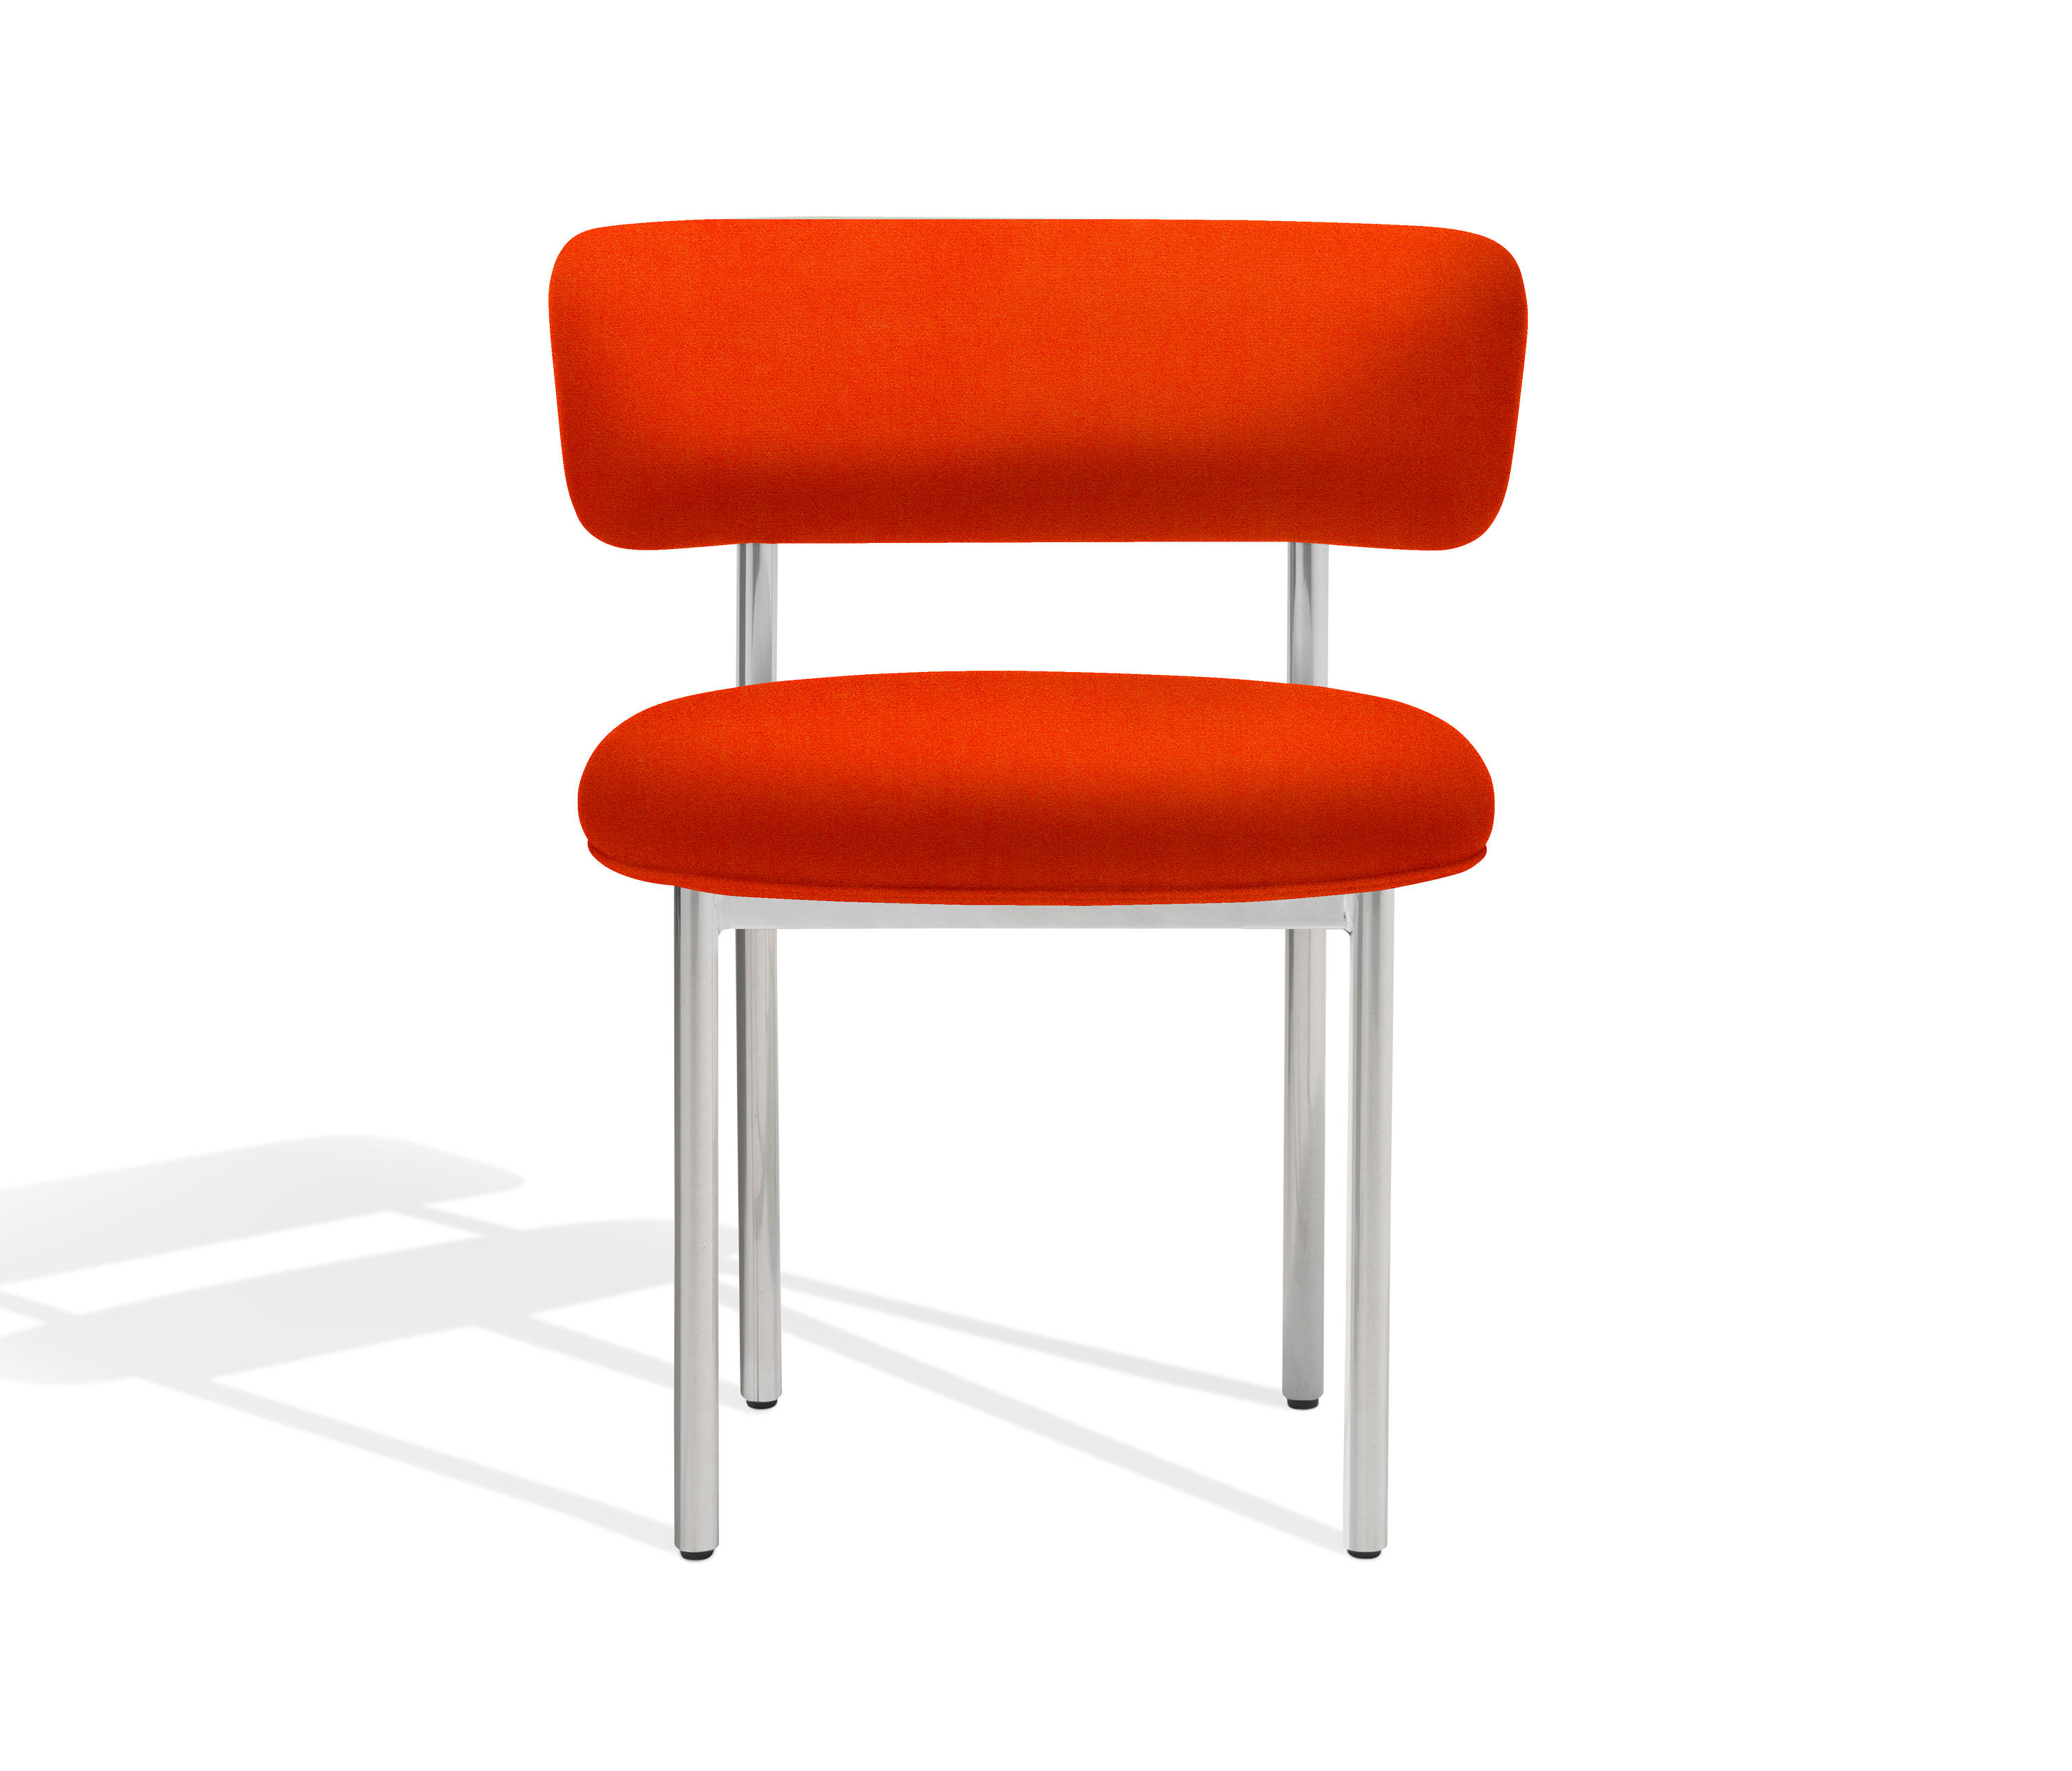 Font regular dining chair | red orange | Architonic